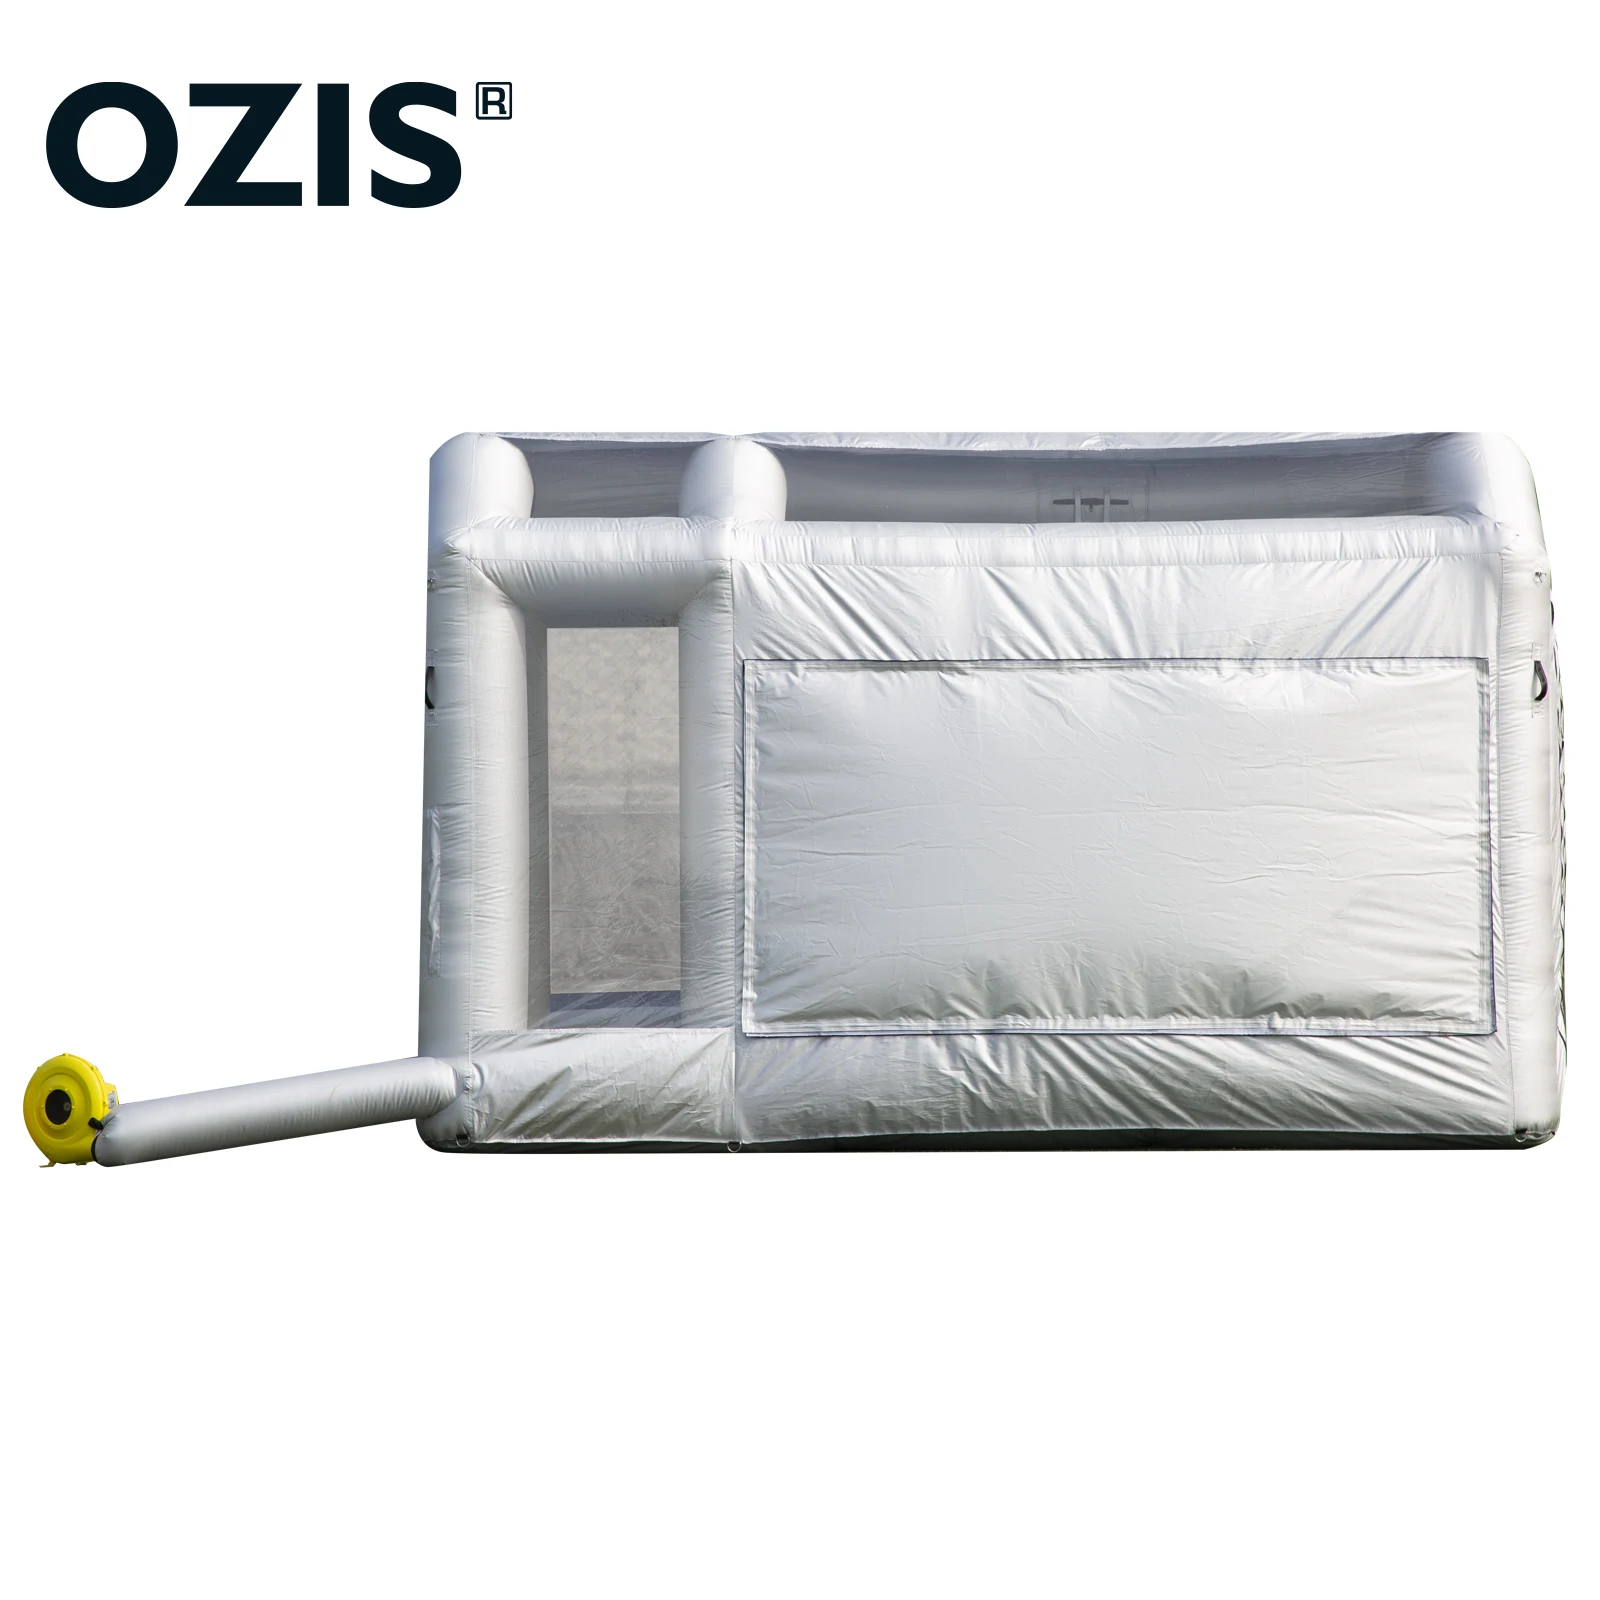 Рекламная надувная кабина для покраски автомобиля OZIS по заводской цене